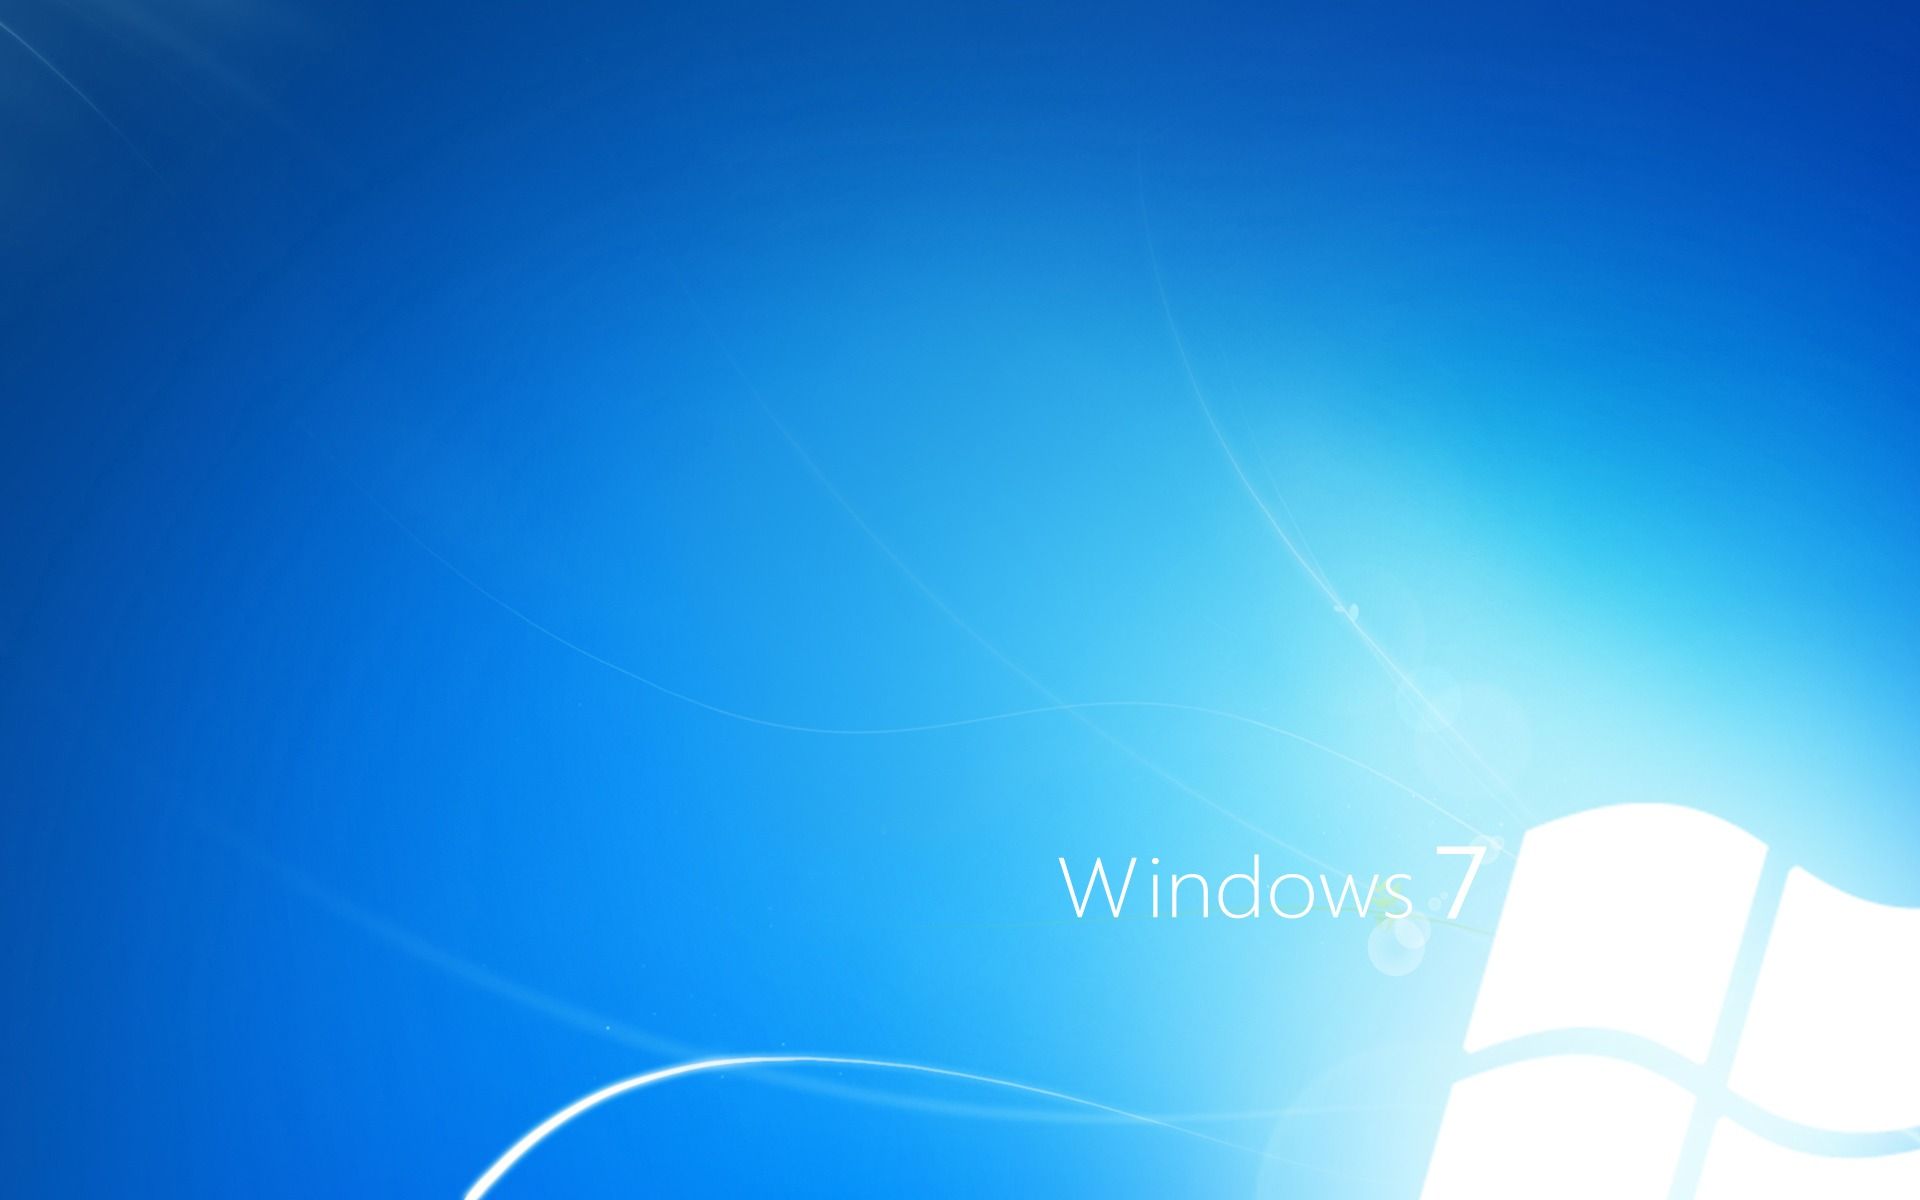 Windows 7 Light Blue Wallpaper Windows Seven Computers Wallpaper in jpg format for free download